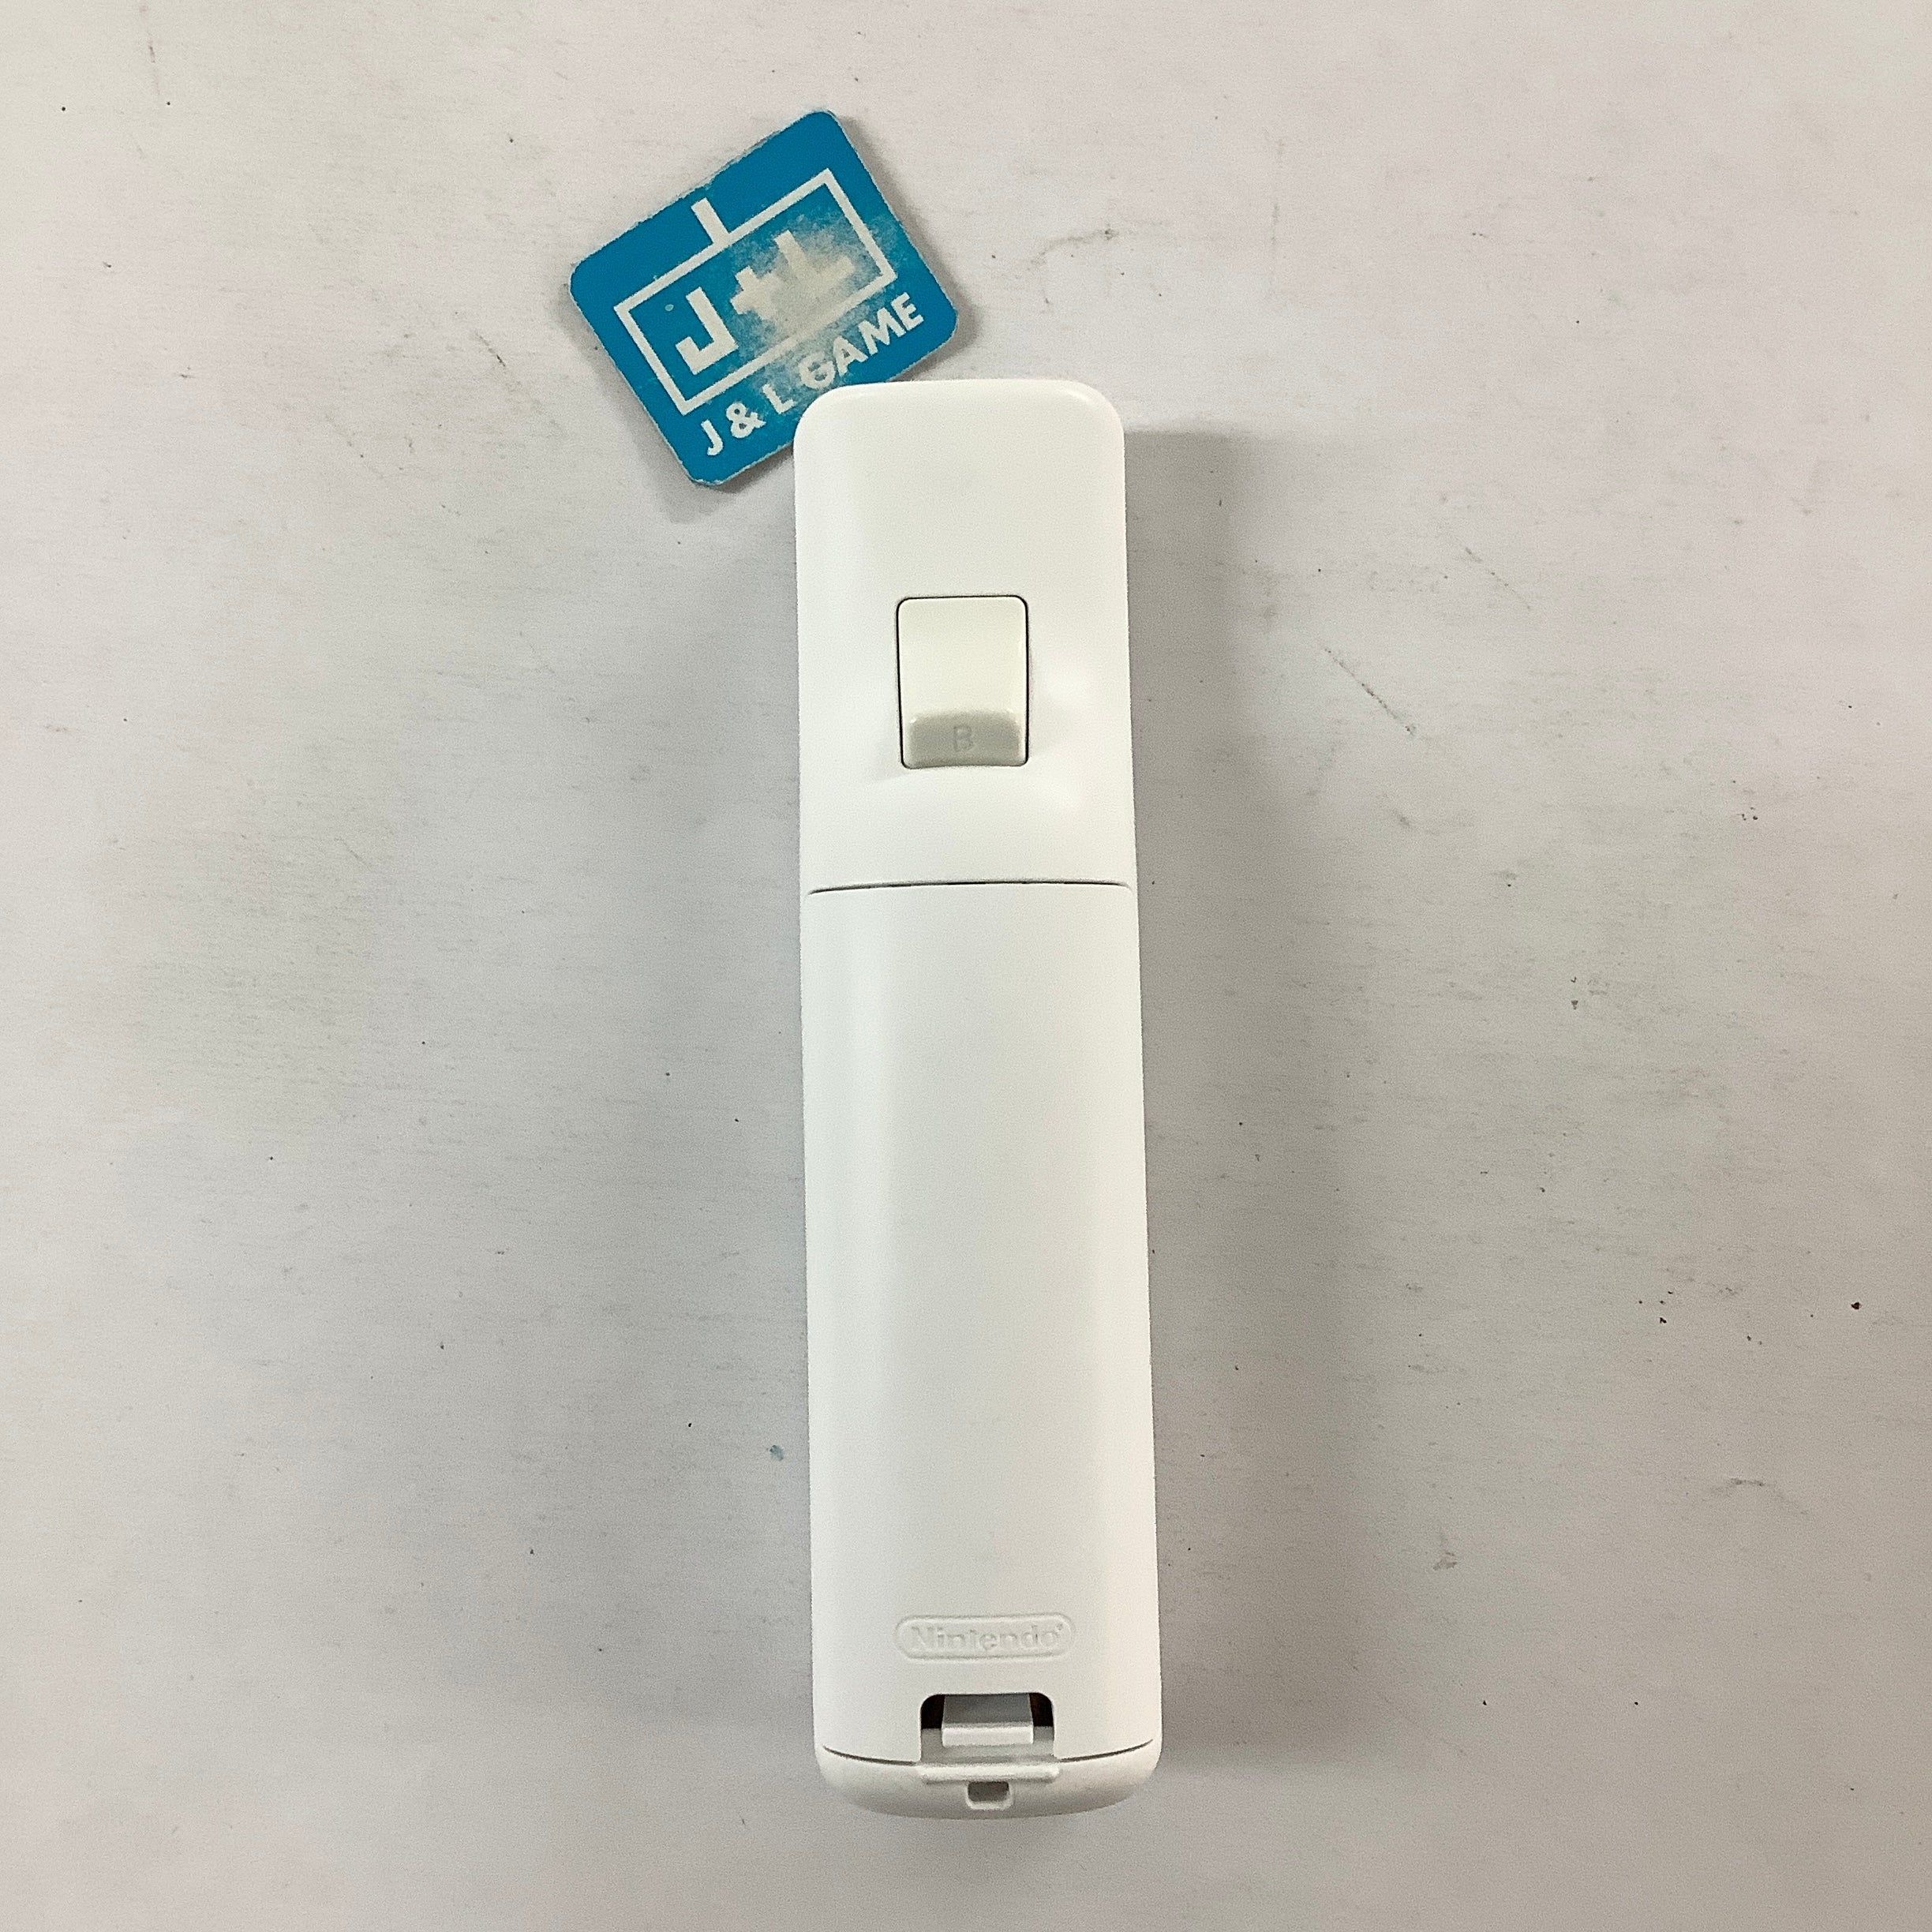 Nintendo Wii U Remote Controller Plus (White)  - Nintendo Wii U [Pre-Owned] Accessories Nintendo   